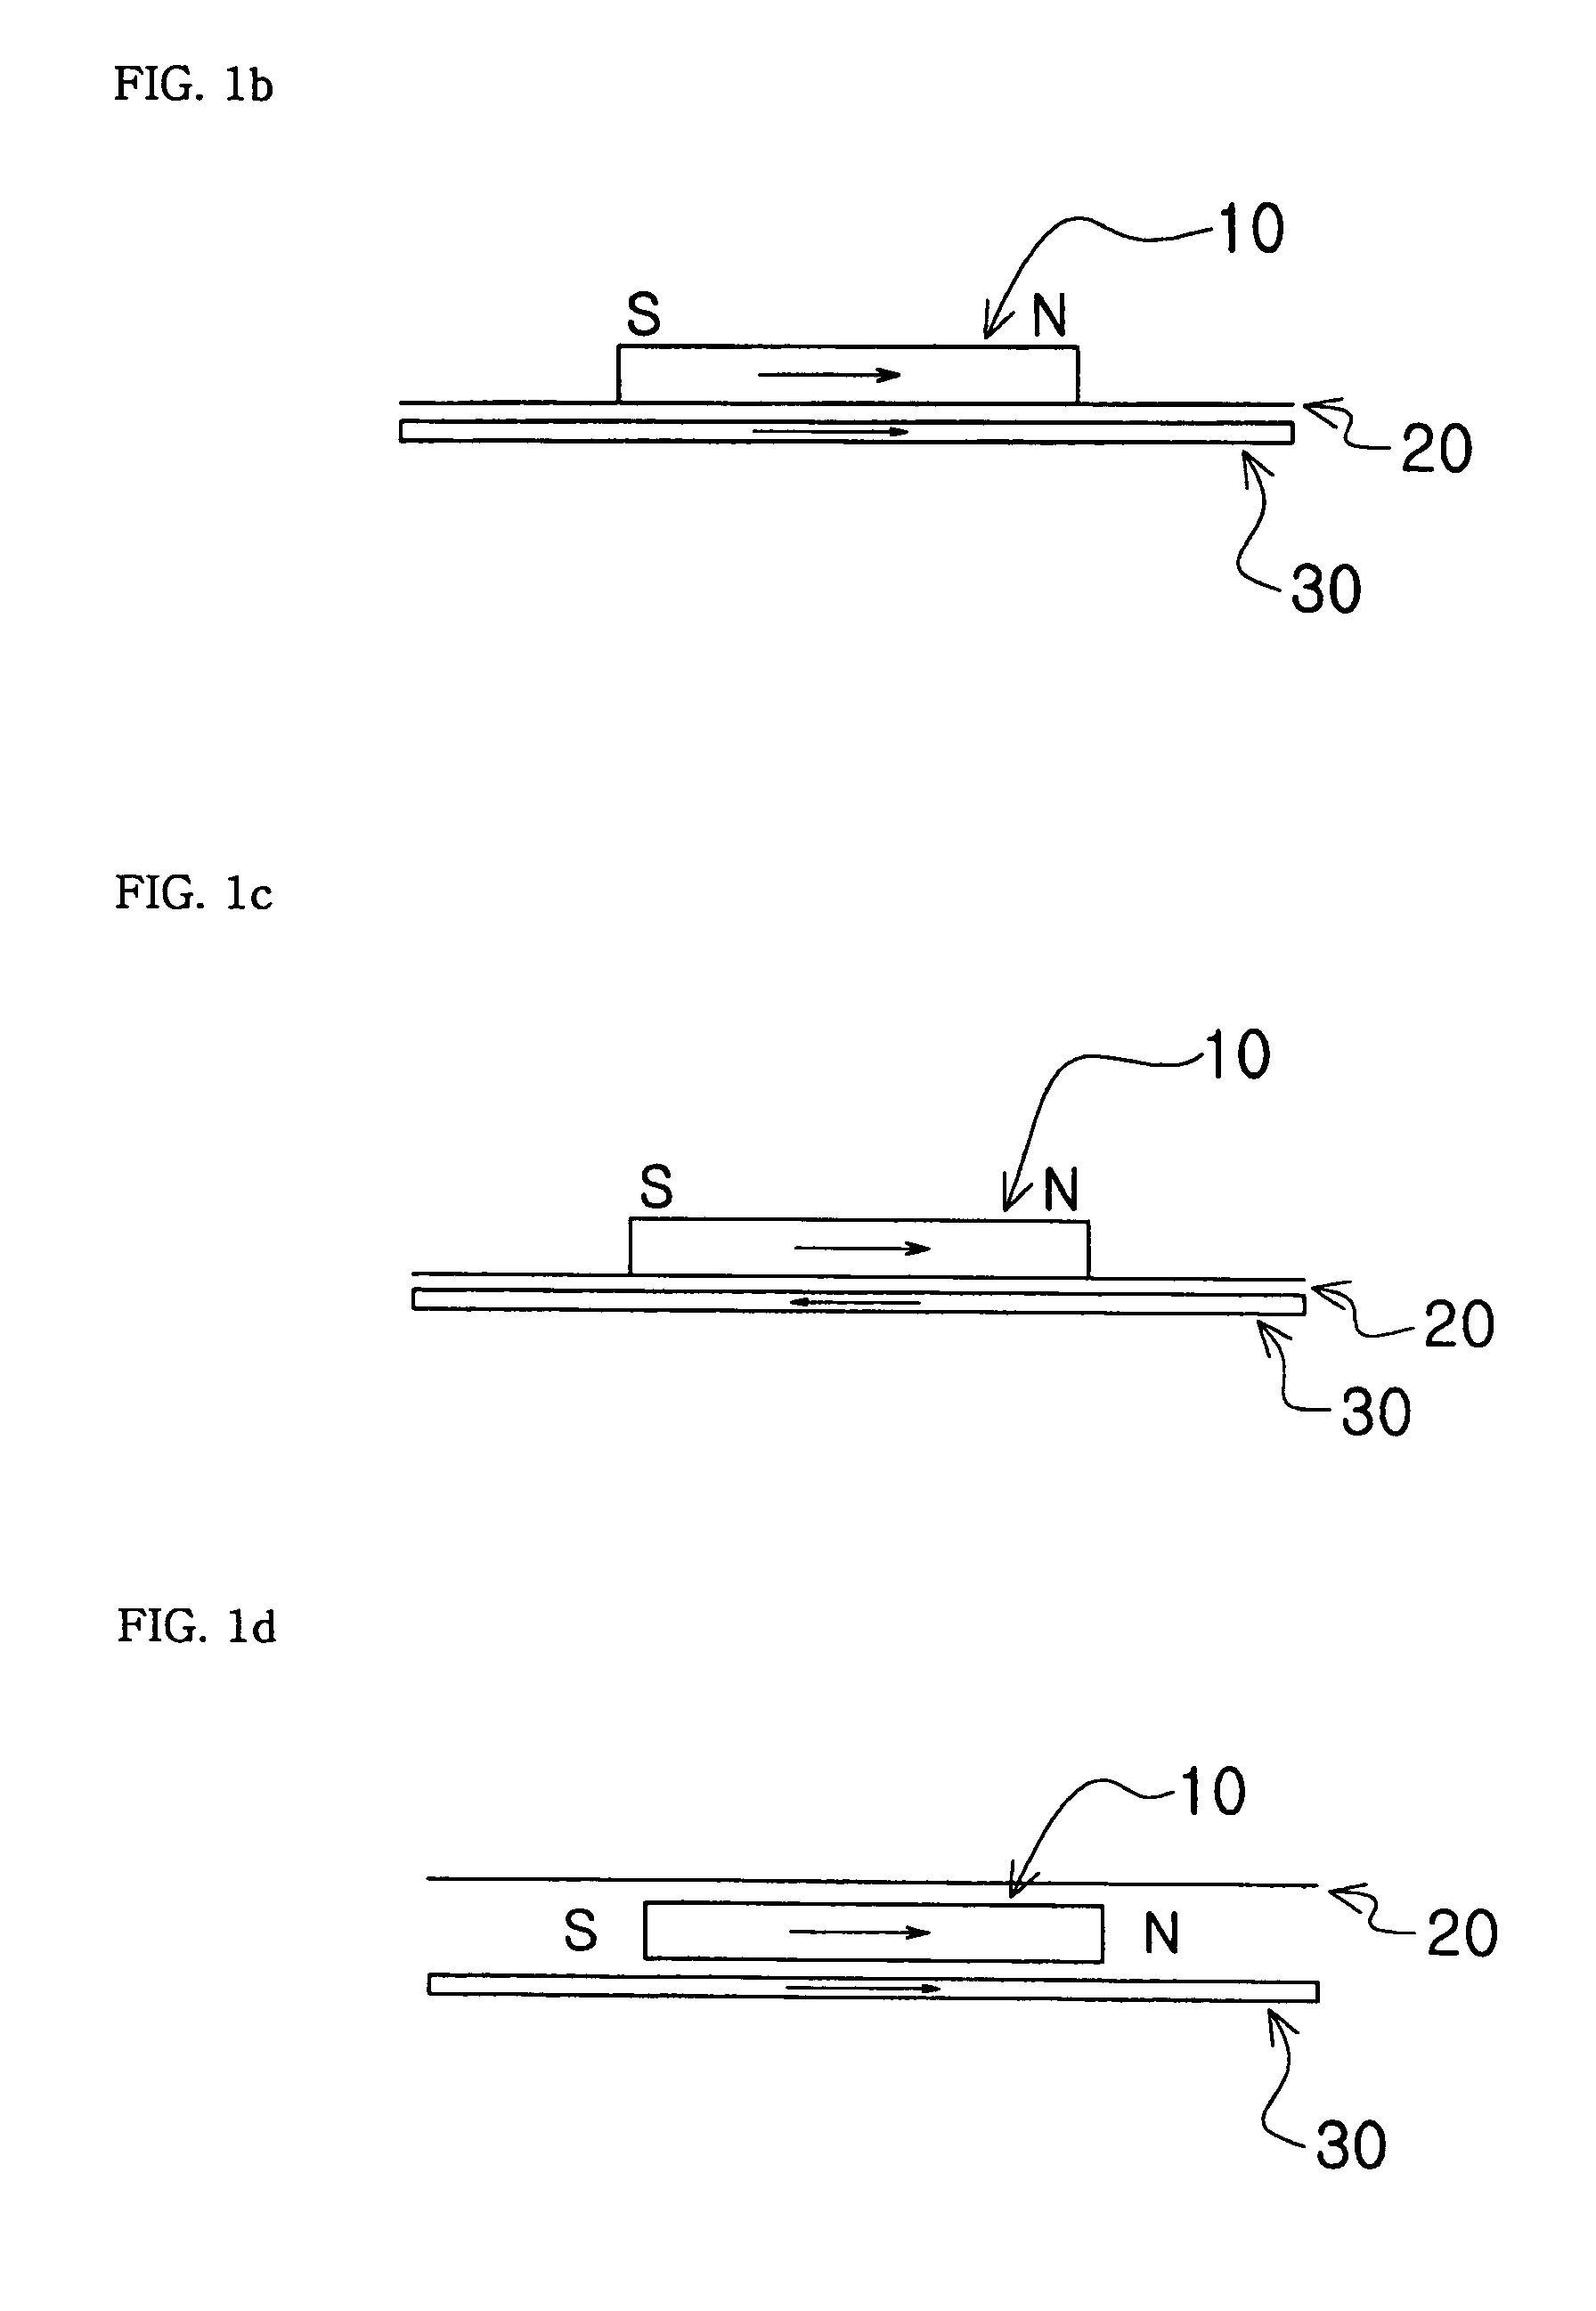 Method of modulating human meridian system using small bar magnet